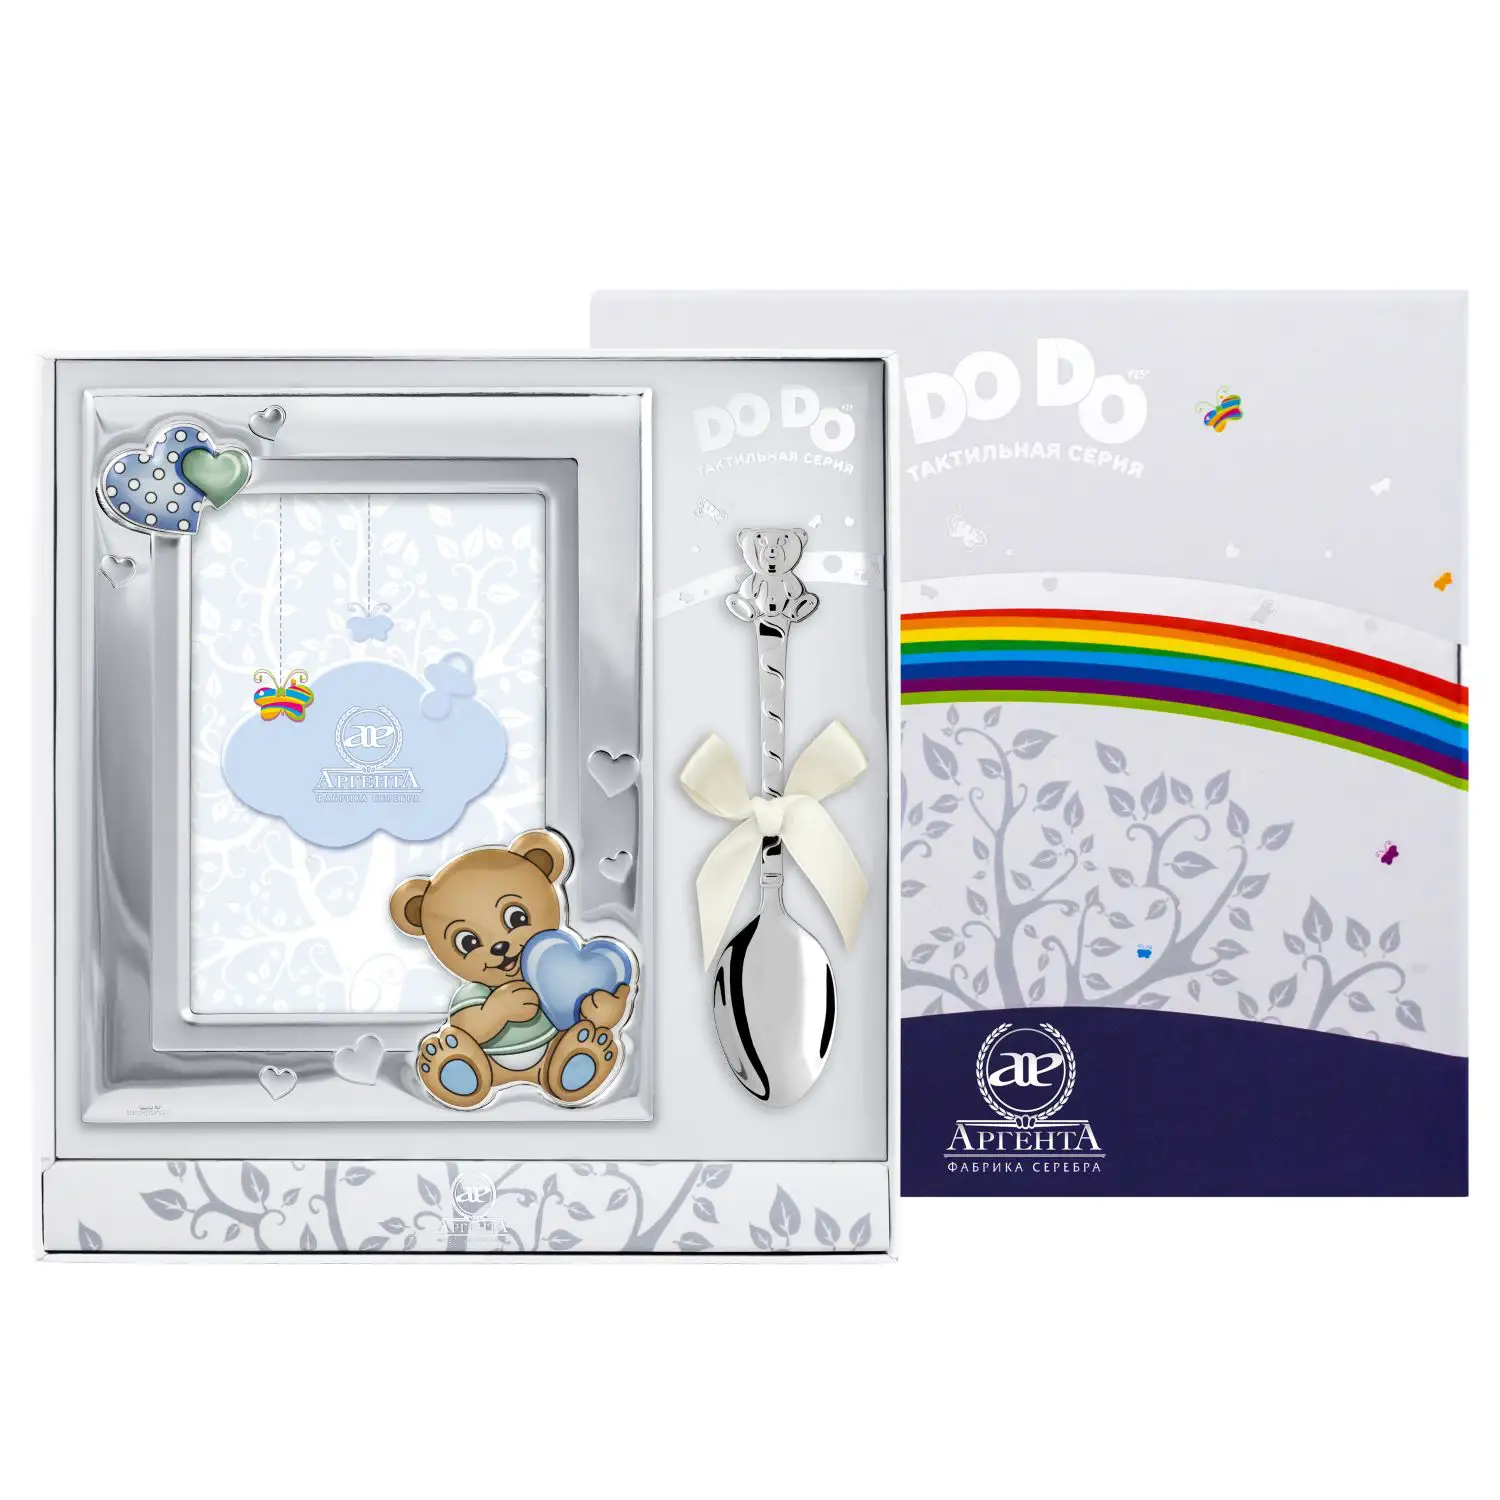 Набор детский DODO Медведь: ложка и рамка, голубой (Серебро 925) набор детский dodo слоненок ложка и рамка голубой серебро 925